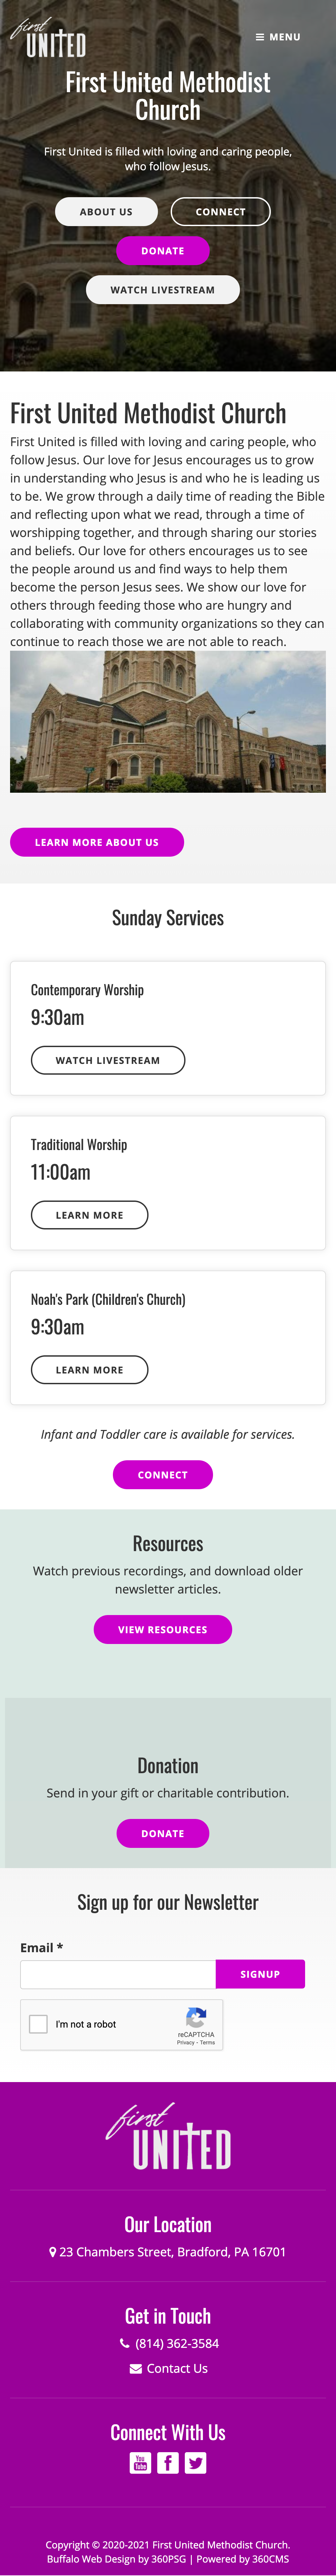 First United Methodist Church Website - Mobile